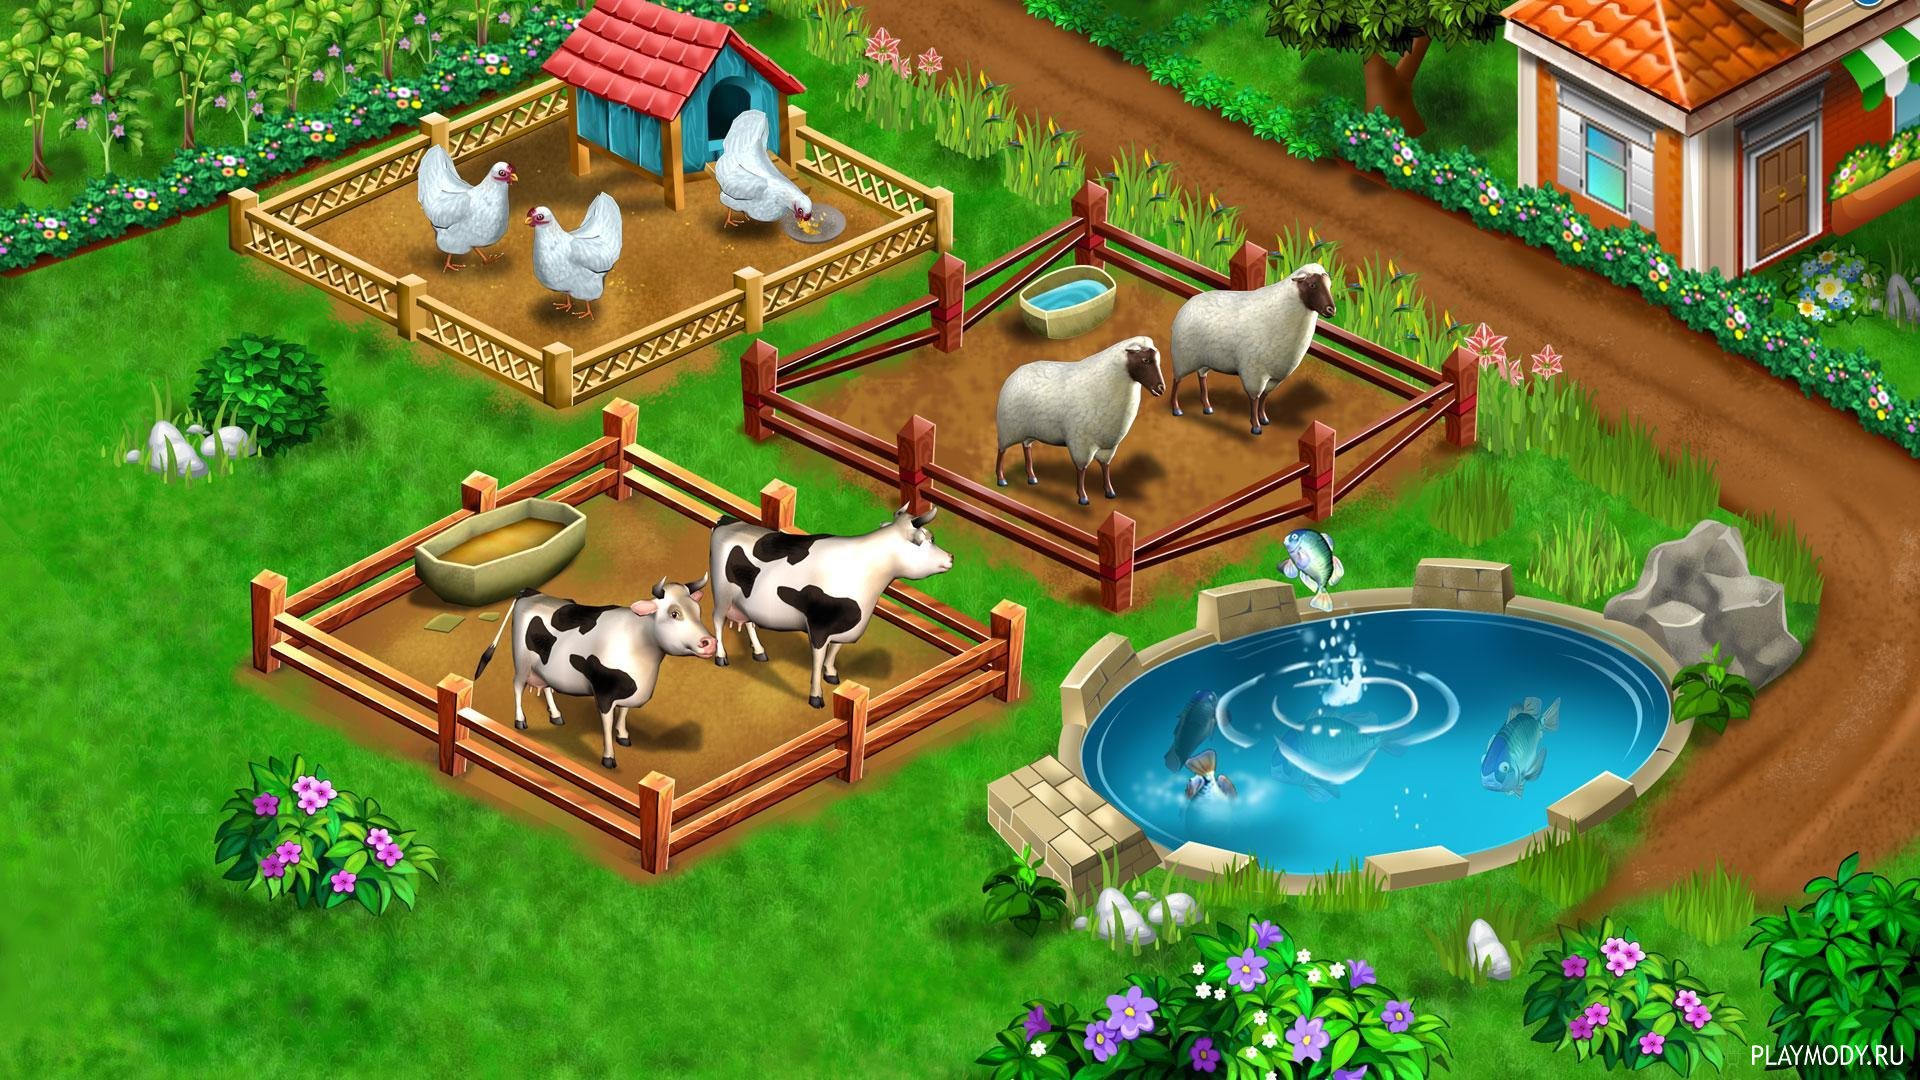 Мобильная игра ферма. Farm Fest игра. Коровья ферма игра. Холидей игра ферма. Игра про корову на ферме.